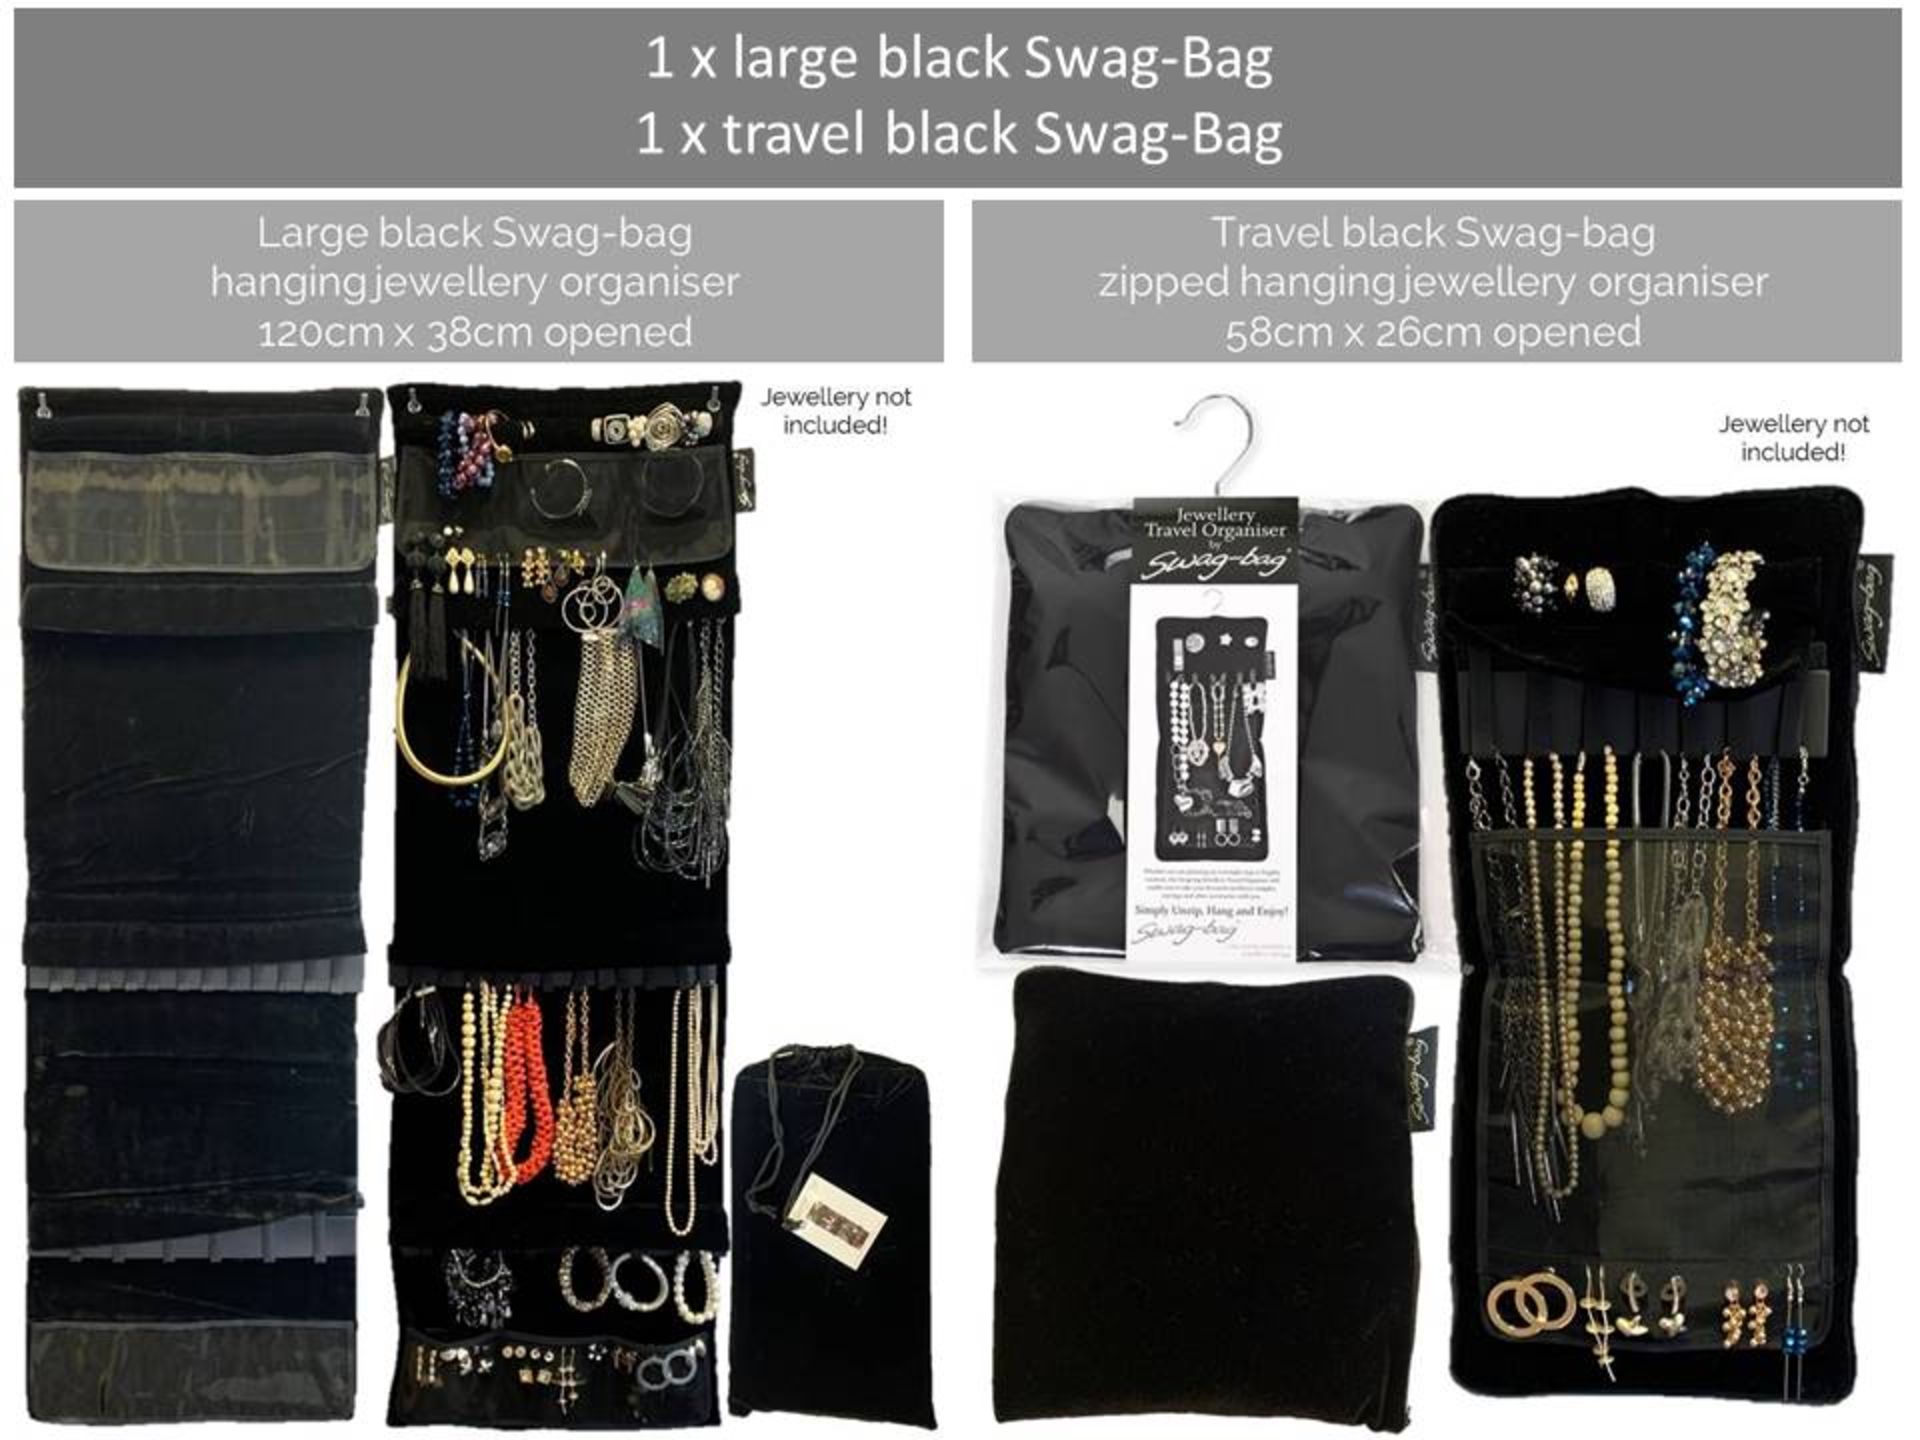 2 x Swag-Bag jewellery organisers - one large hanging Swag-Bag in black,